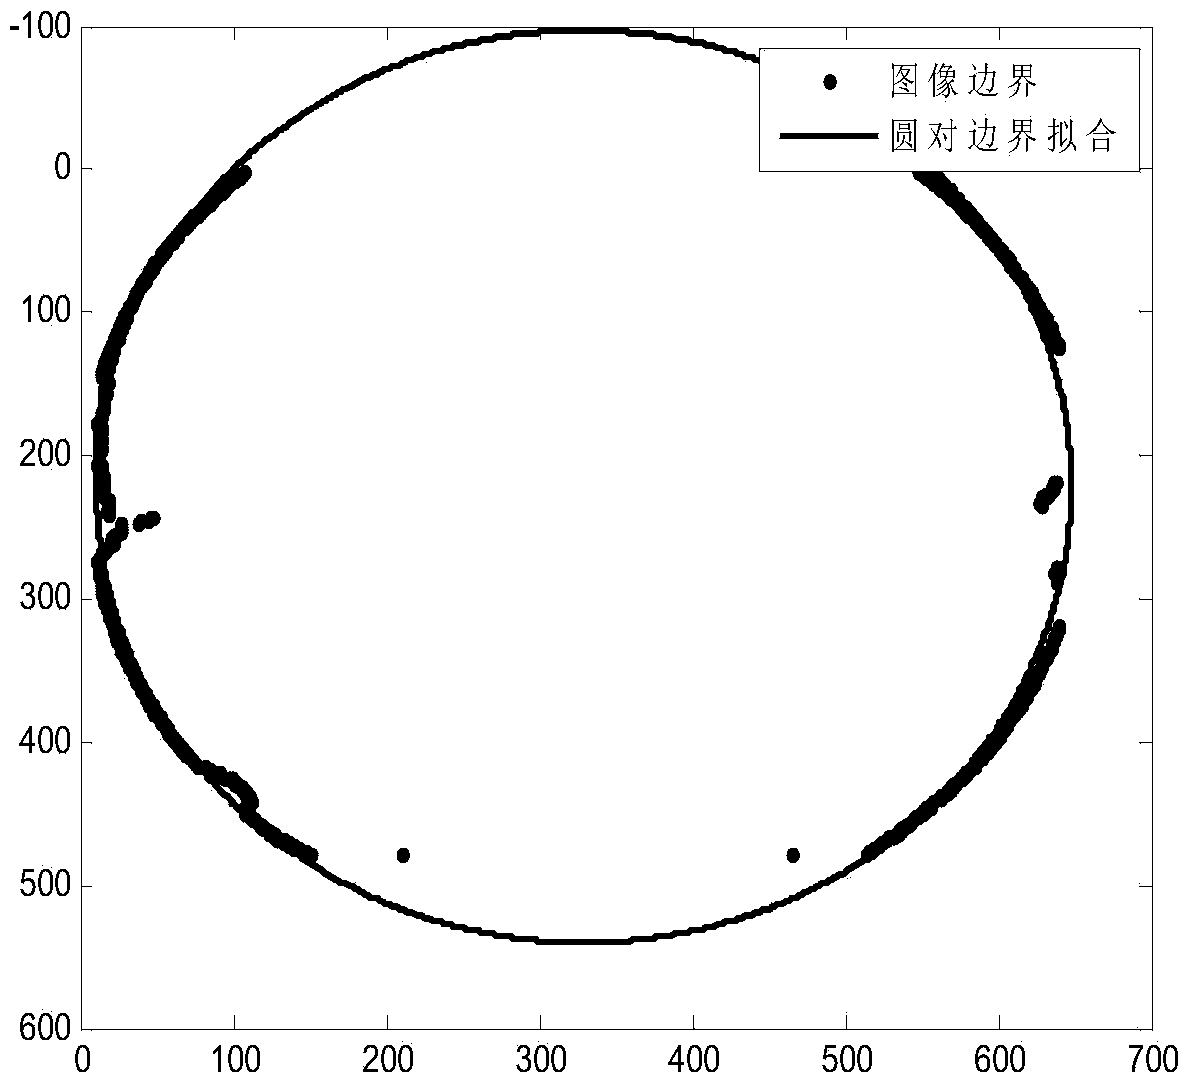 Fisheye image correction method based on changed long axis ellipse fitting